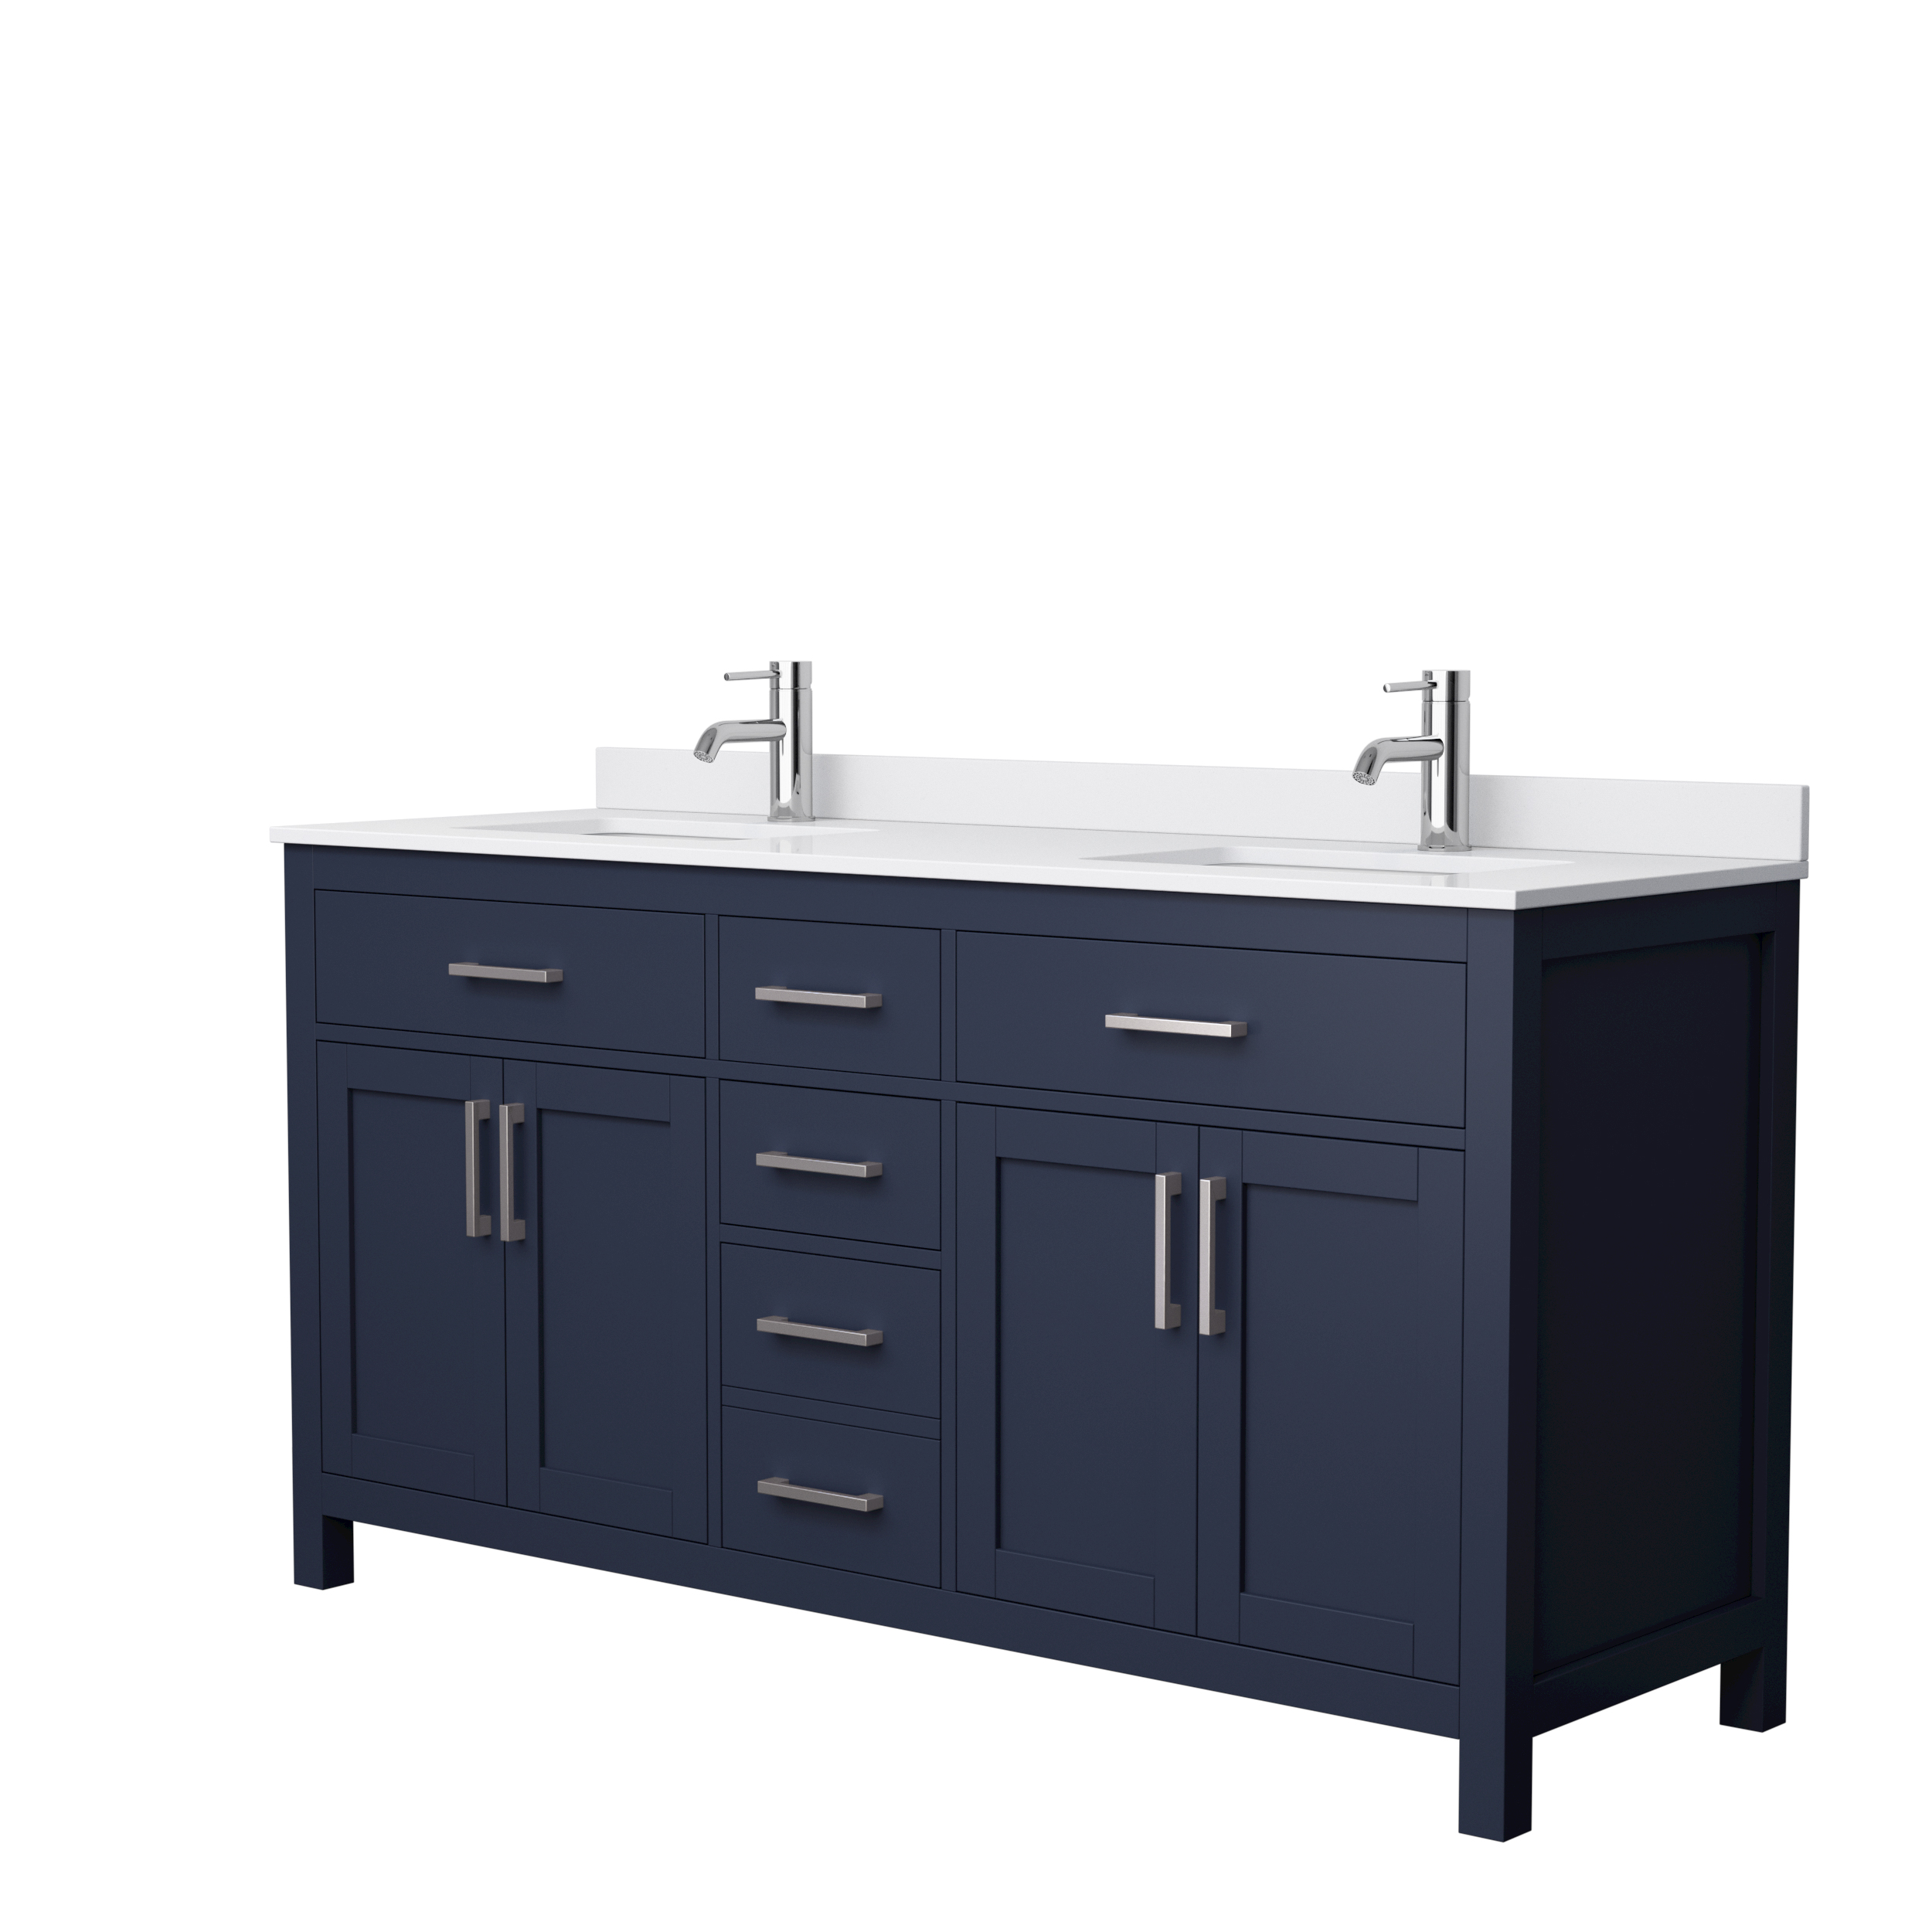 66" Double Bathroom Vanity in Dark Blue, Carrara Cultured Marble Countertop, Undermount Square Sinks, Brushed Nickel Trim